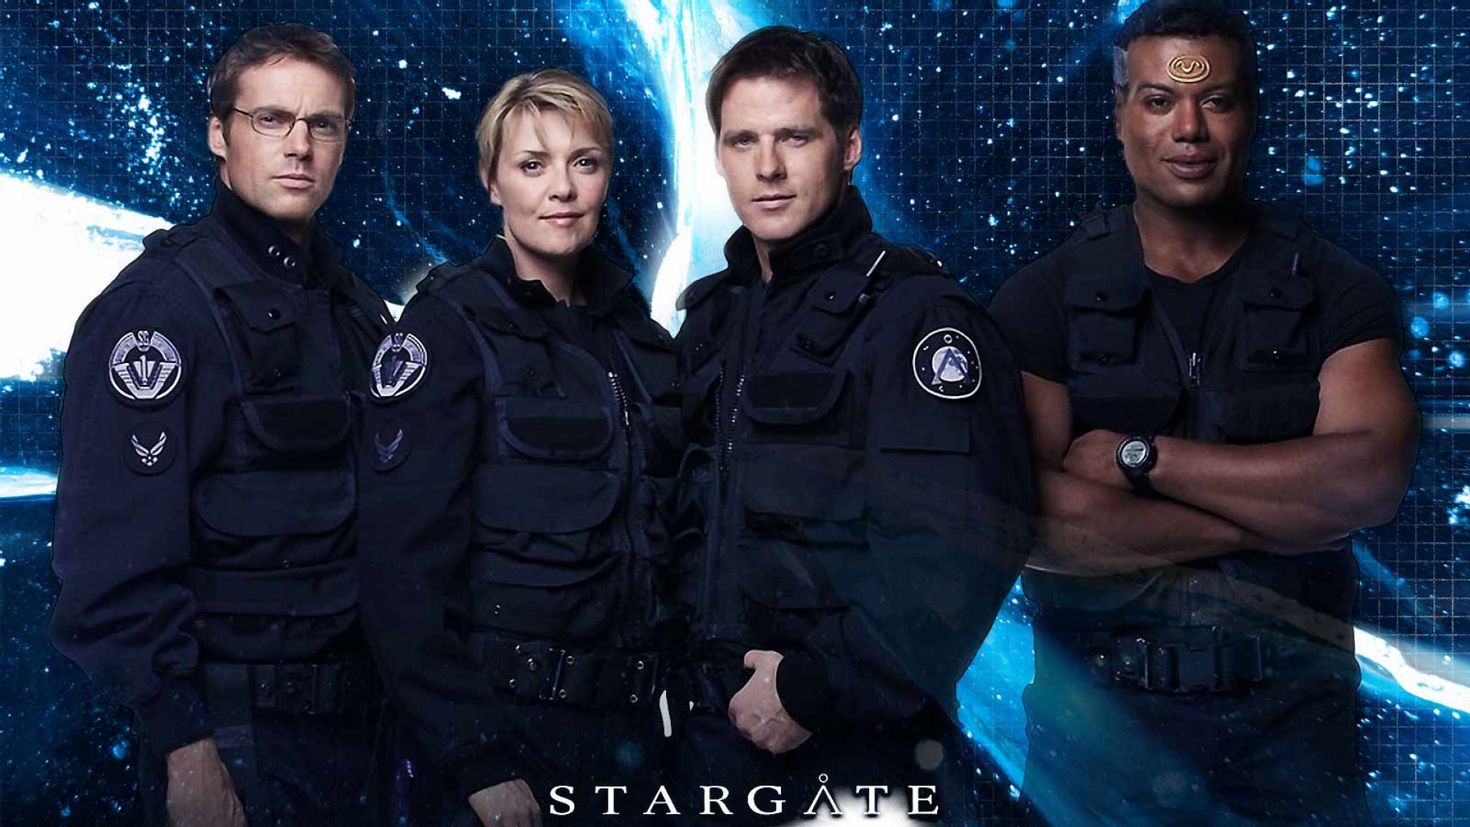 Звездные врата зв 1 6. Звёздные врата 3в-1. Stargate sg1.